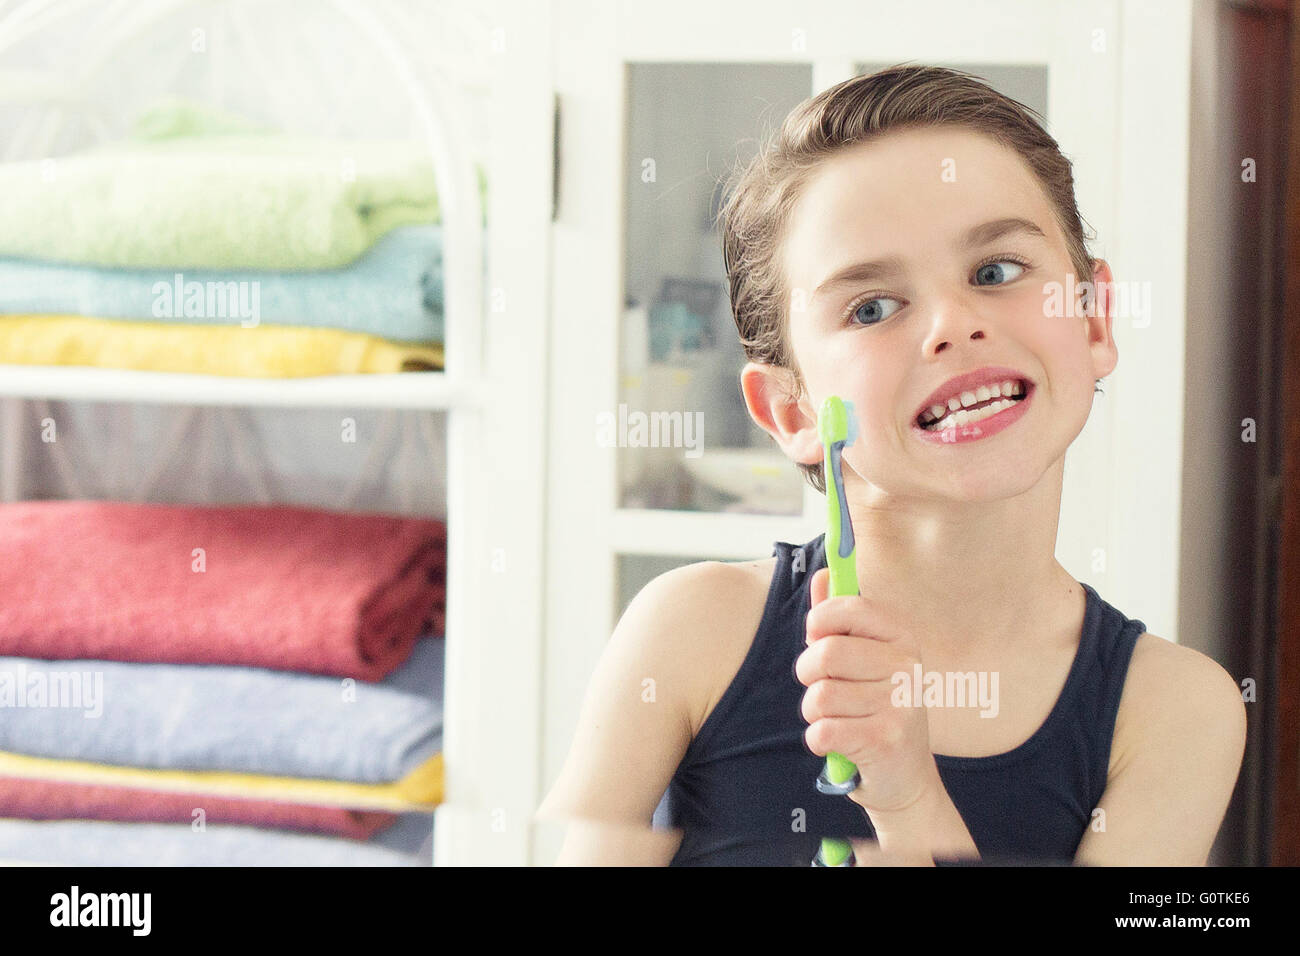 Portrait of a Boy brushing his teeth in bathroom Stock Photo